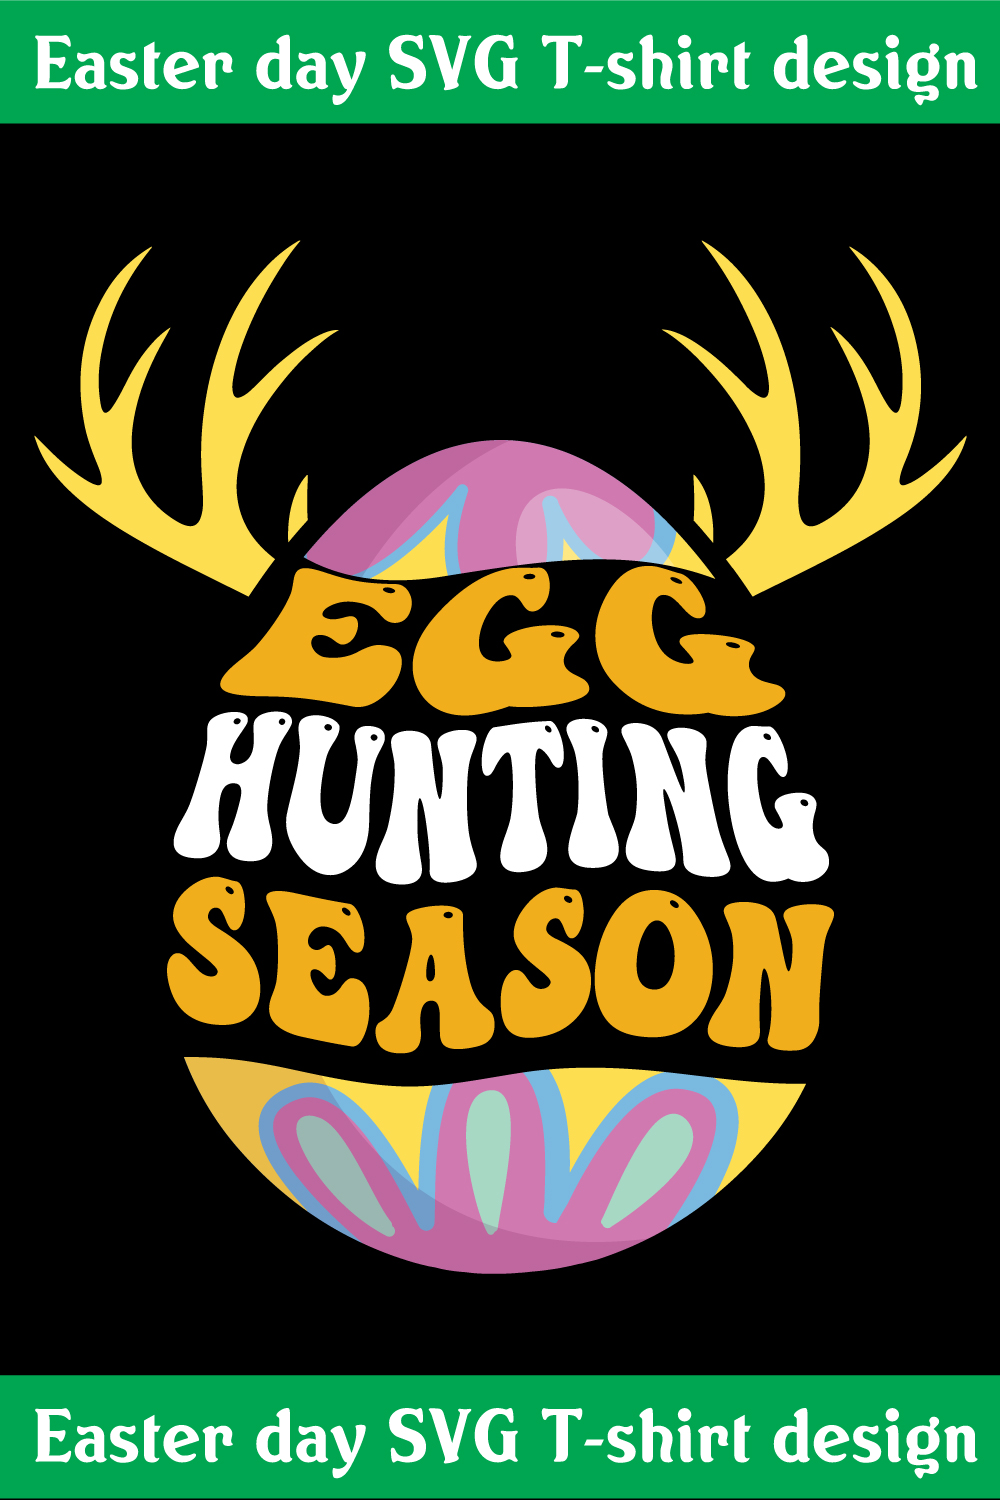 EGG hunting season Easter Day printable T-Shirt pinterest preview image.